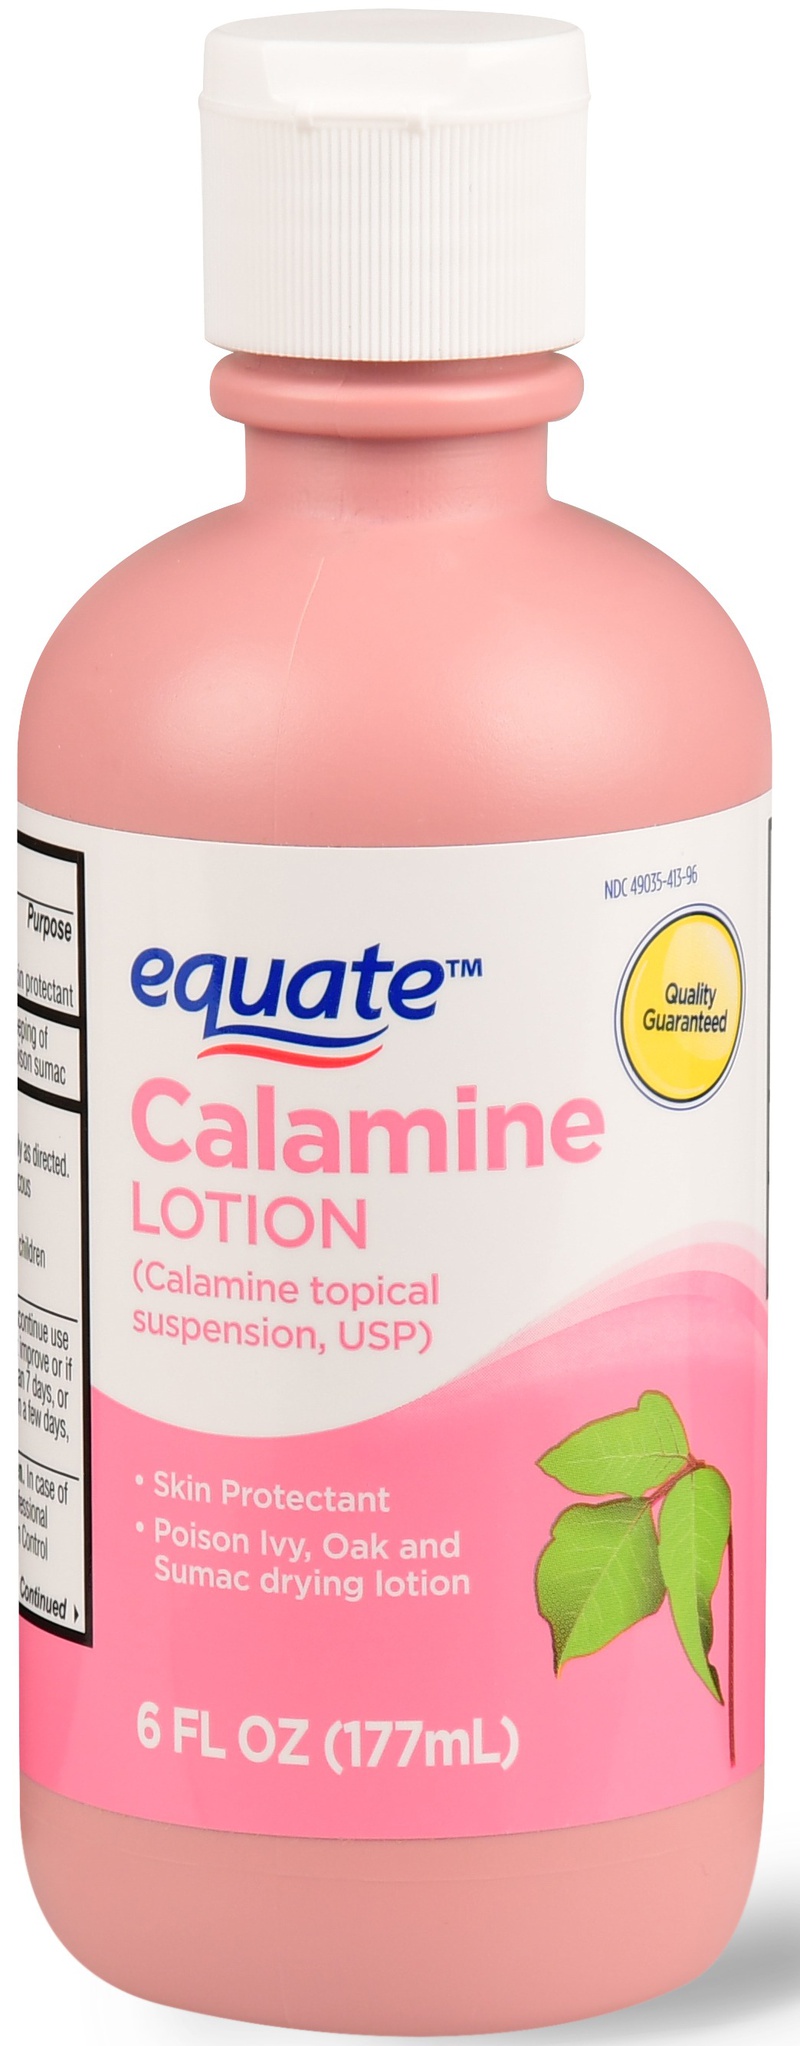 Equate Calamine Lotion